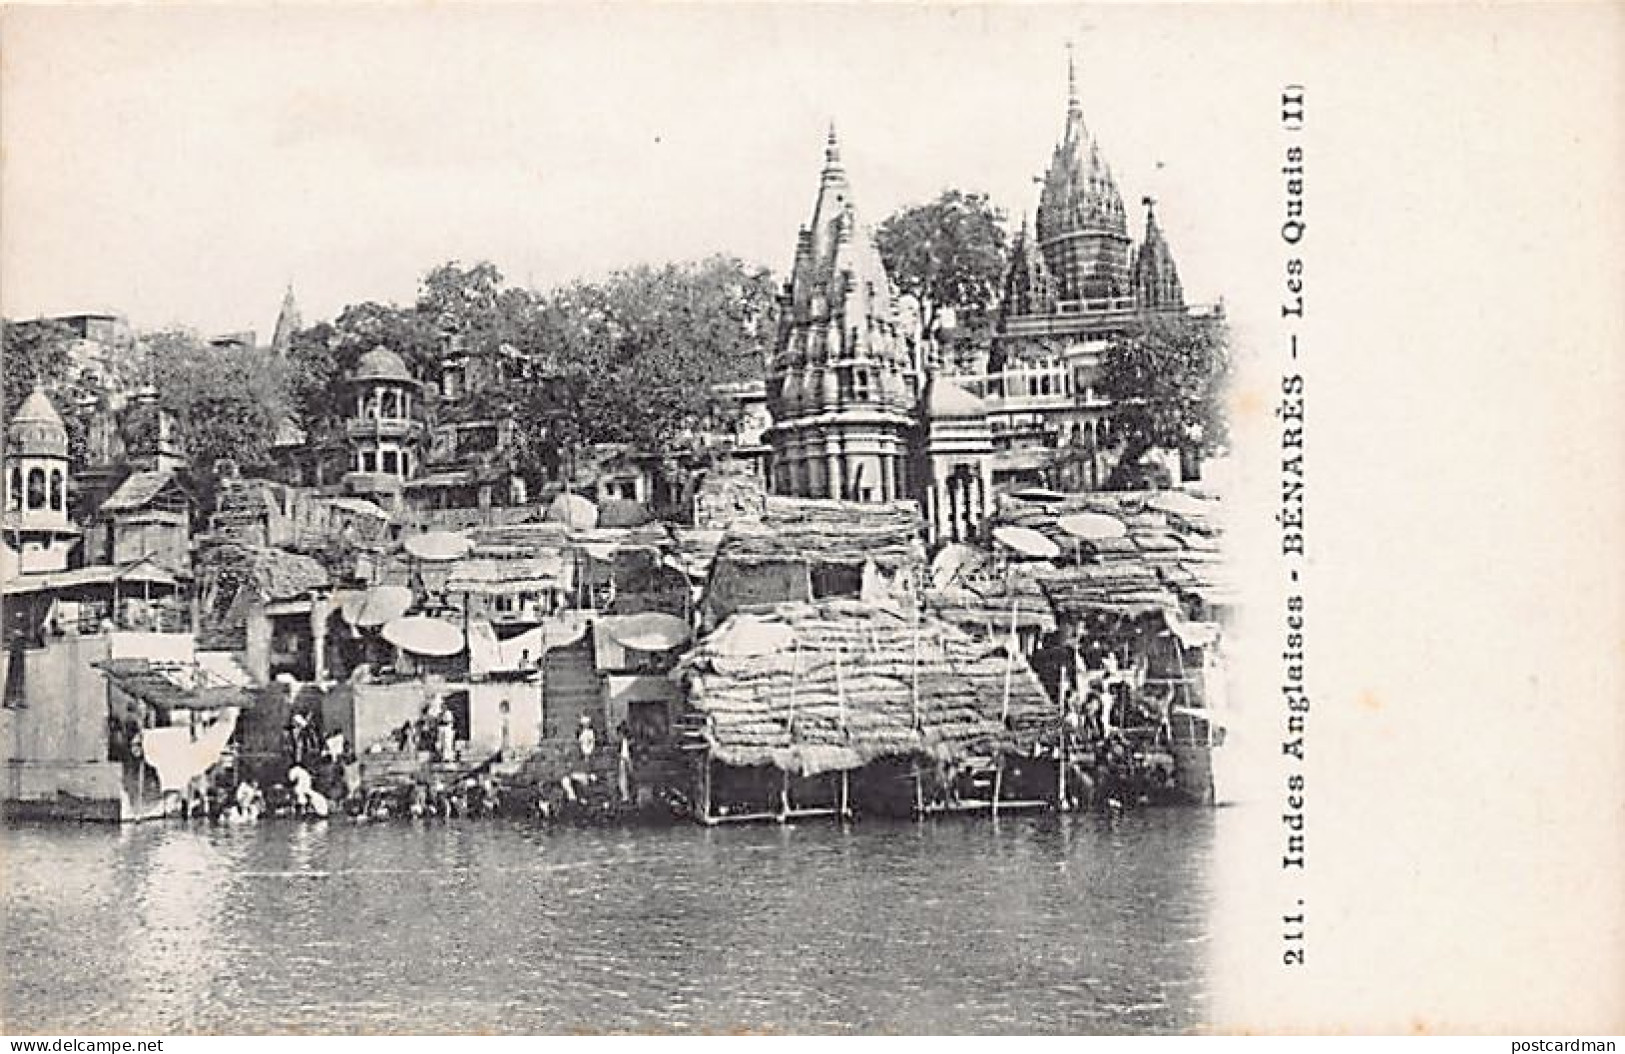 India - BENARES Varanasi - The Docks (ii) - Publ. Messageries Maritimes 211 - India